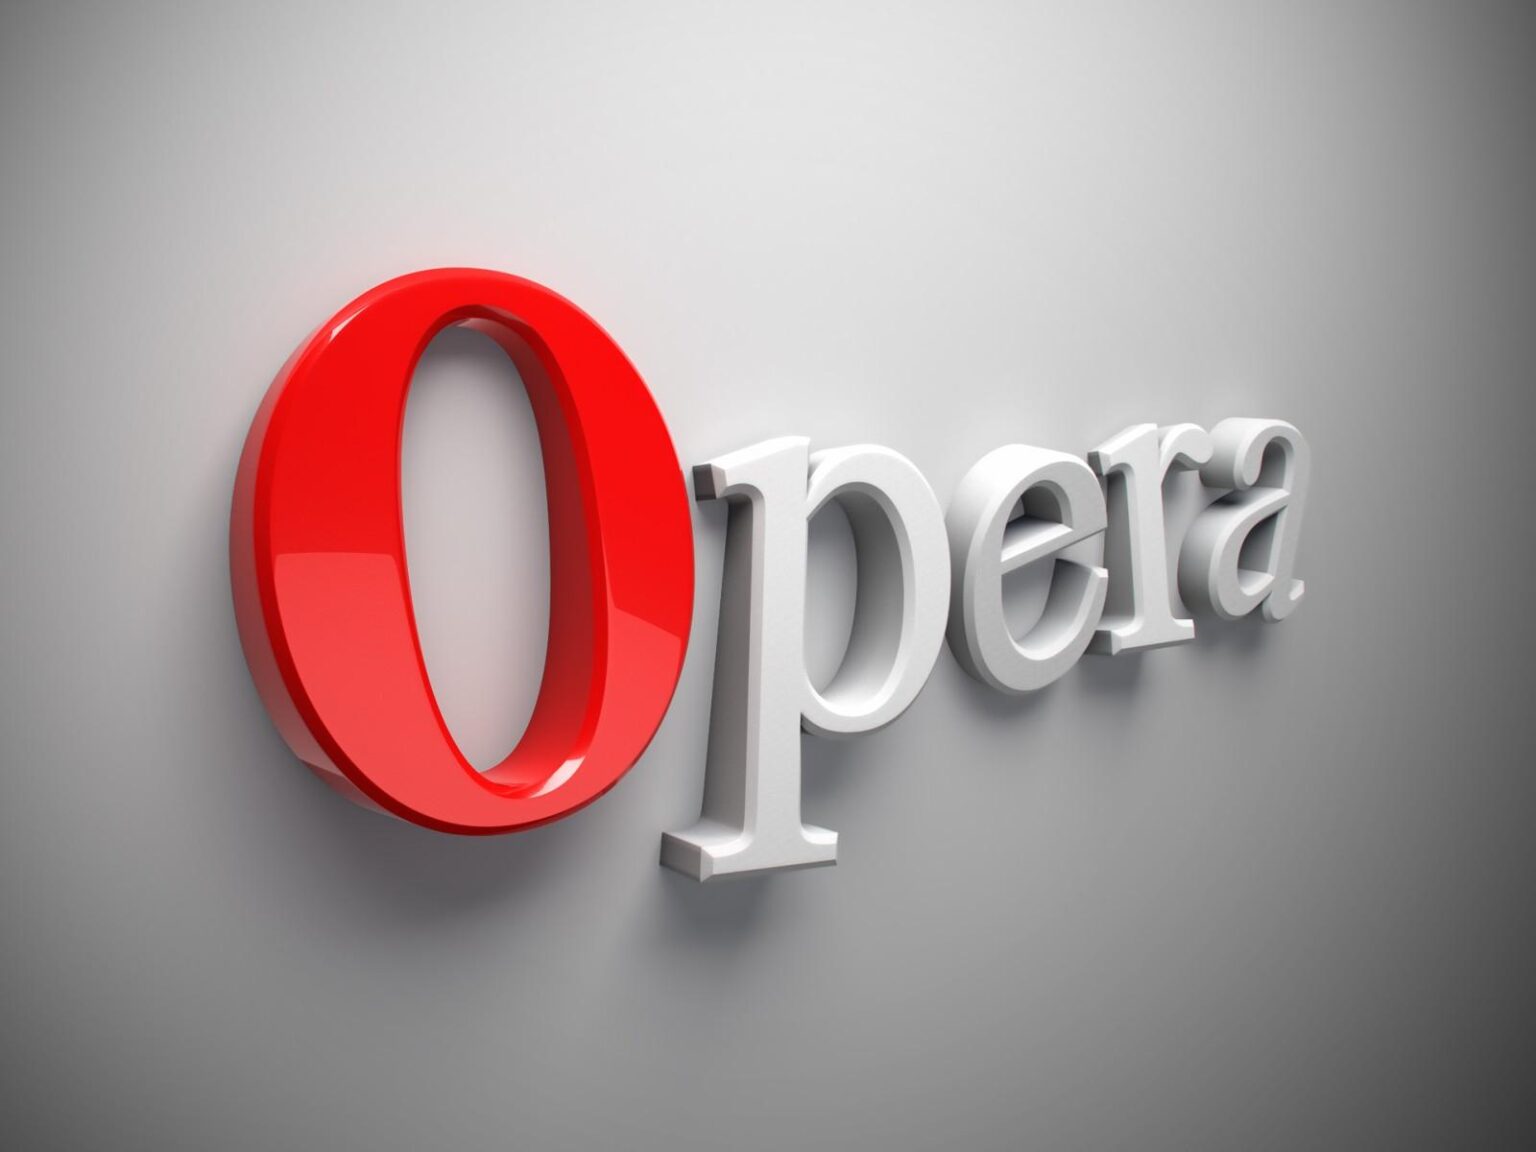 opera mini free download for windows 7 32 bit latest